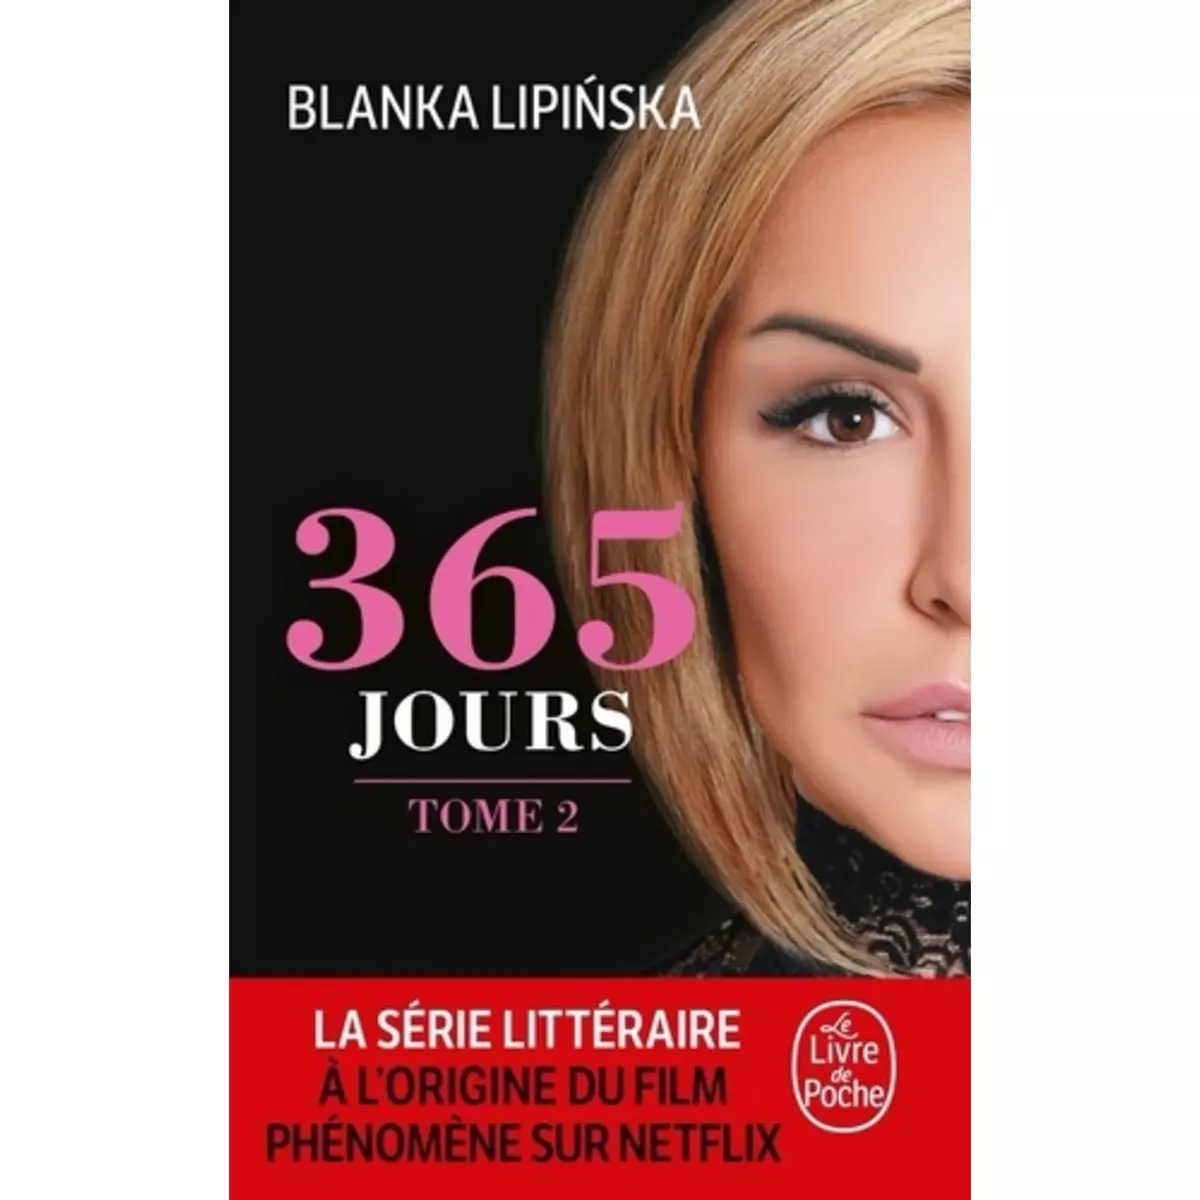  365 JOURS. TOME 2, Lipińska Blanka